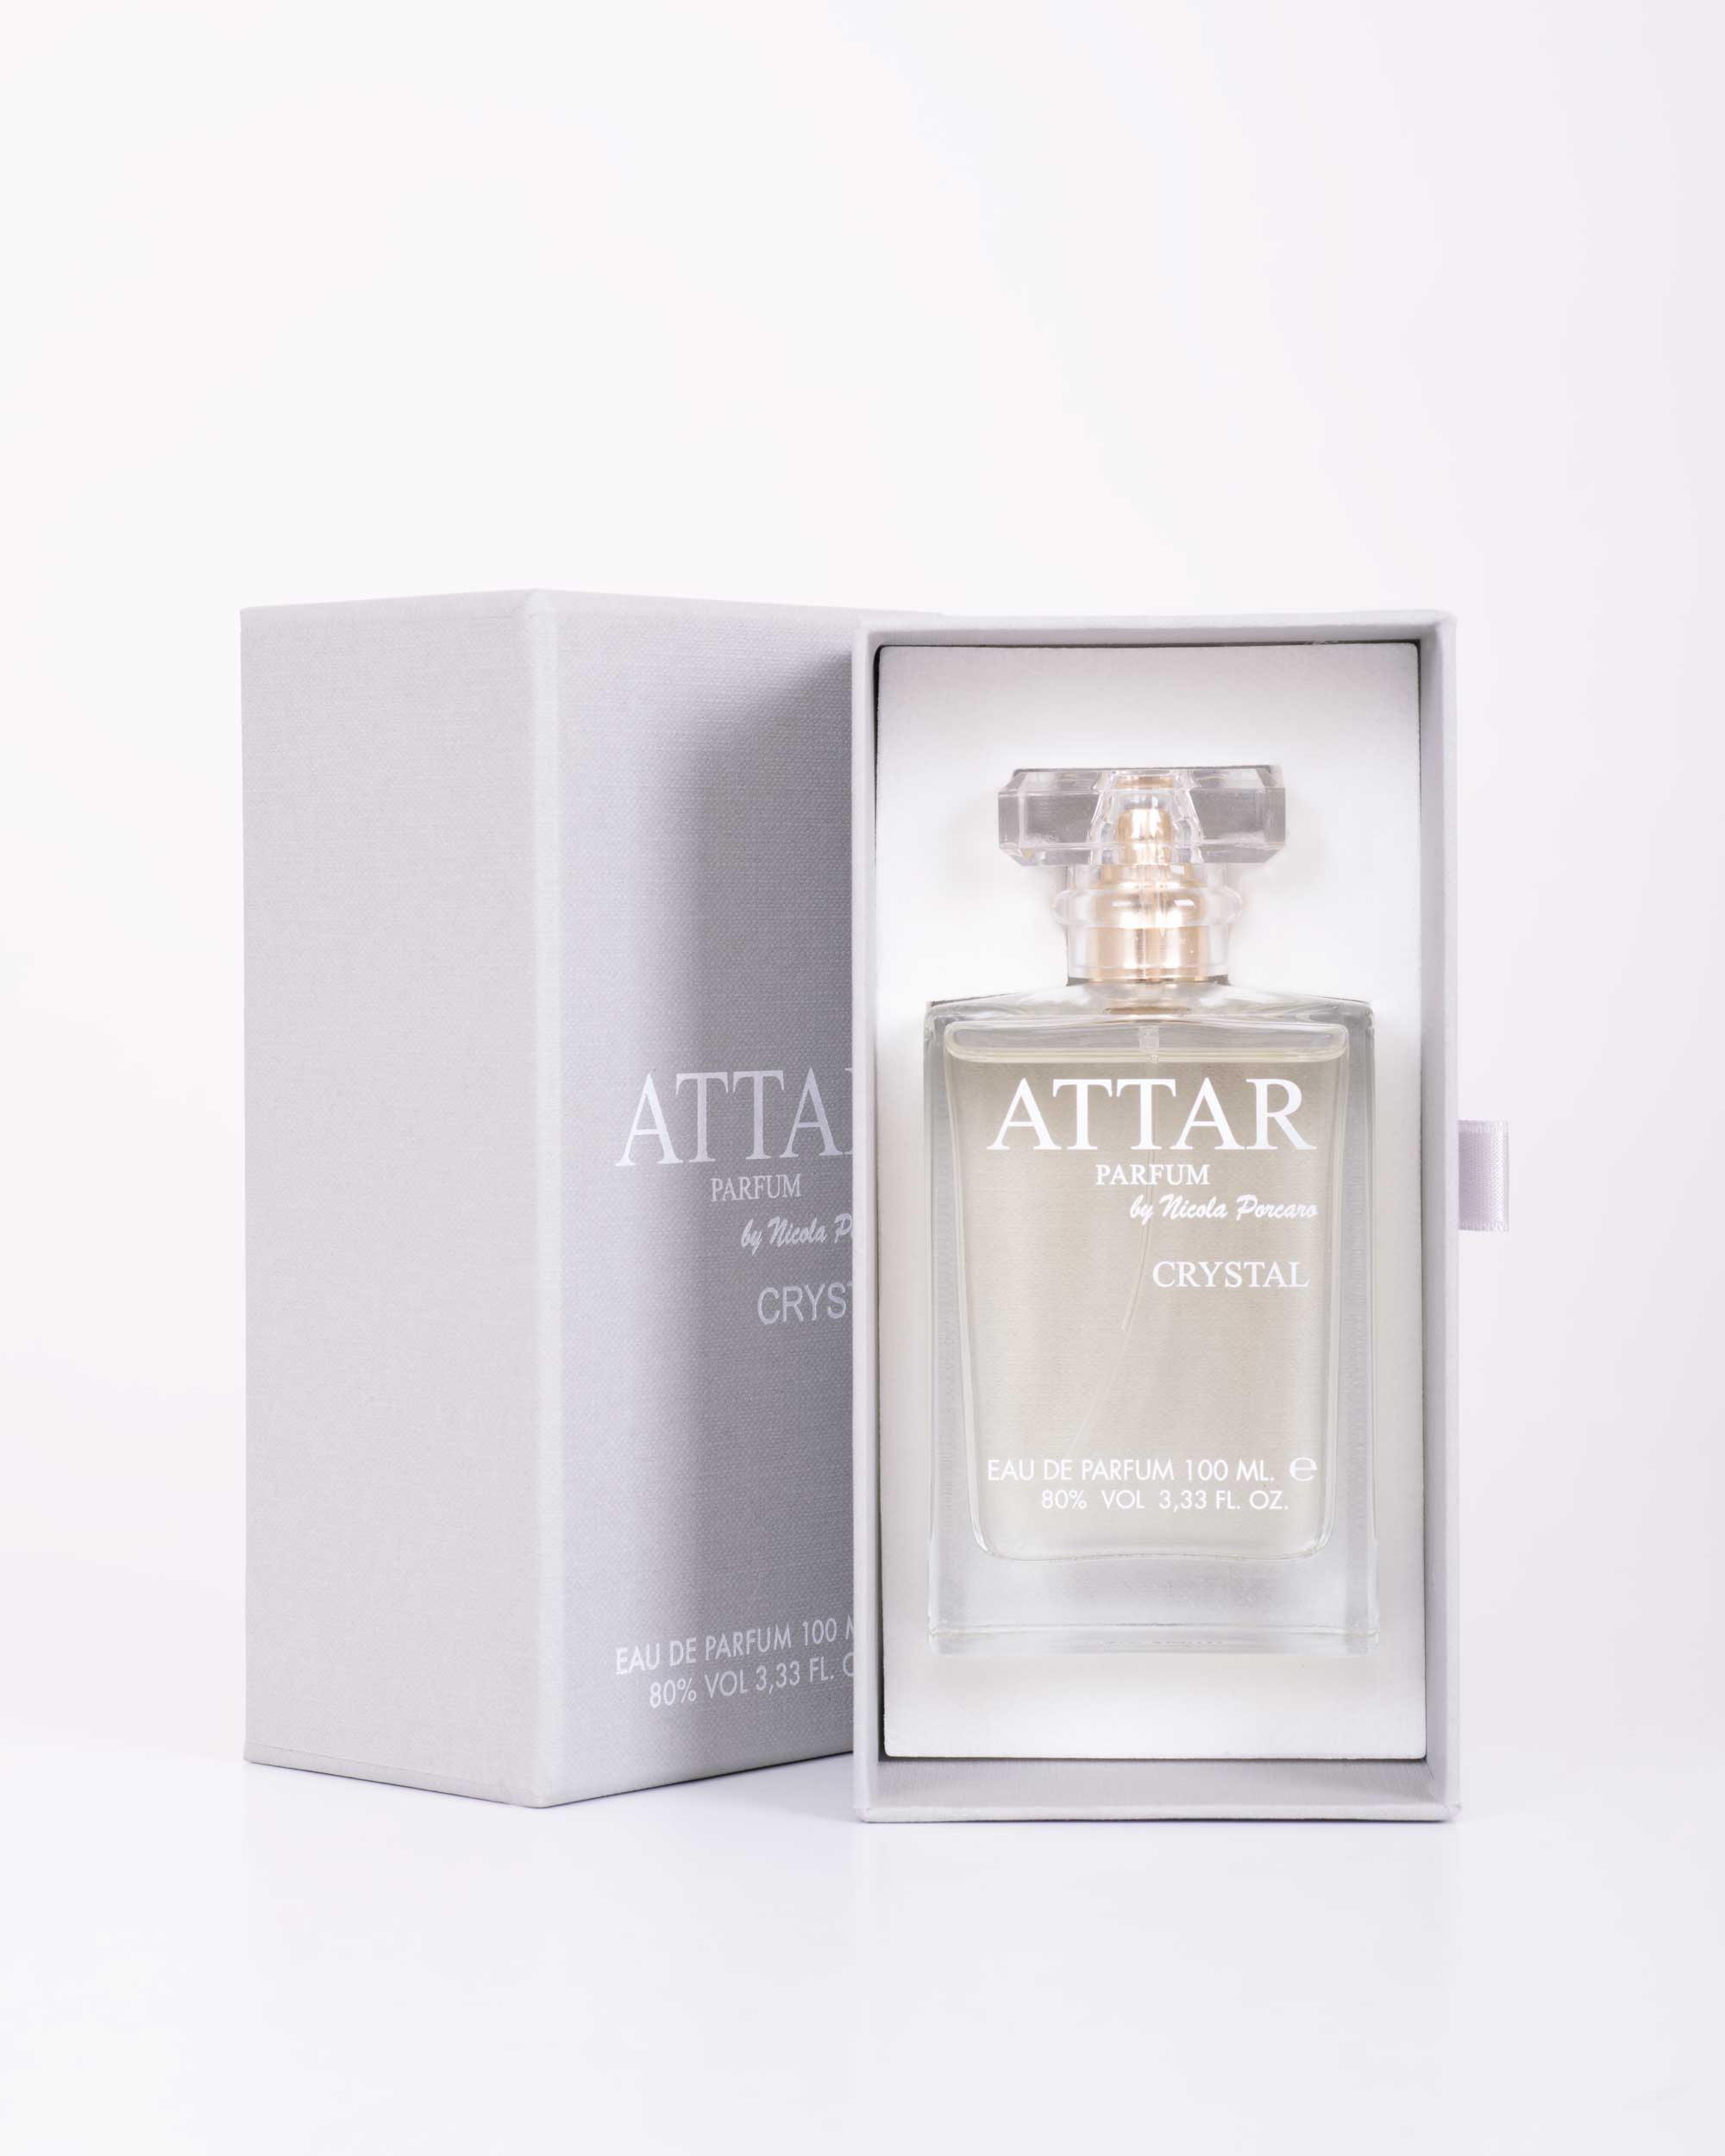 ATTAR Parfum Crystal